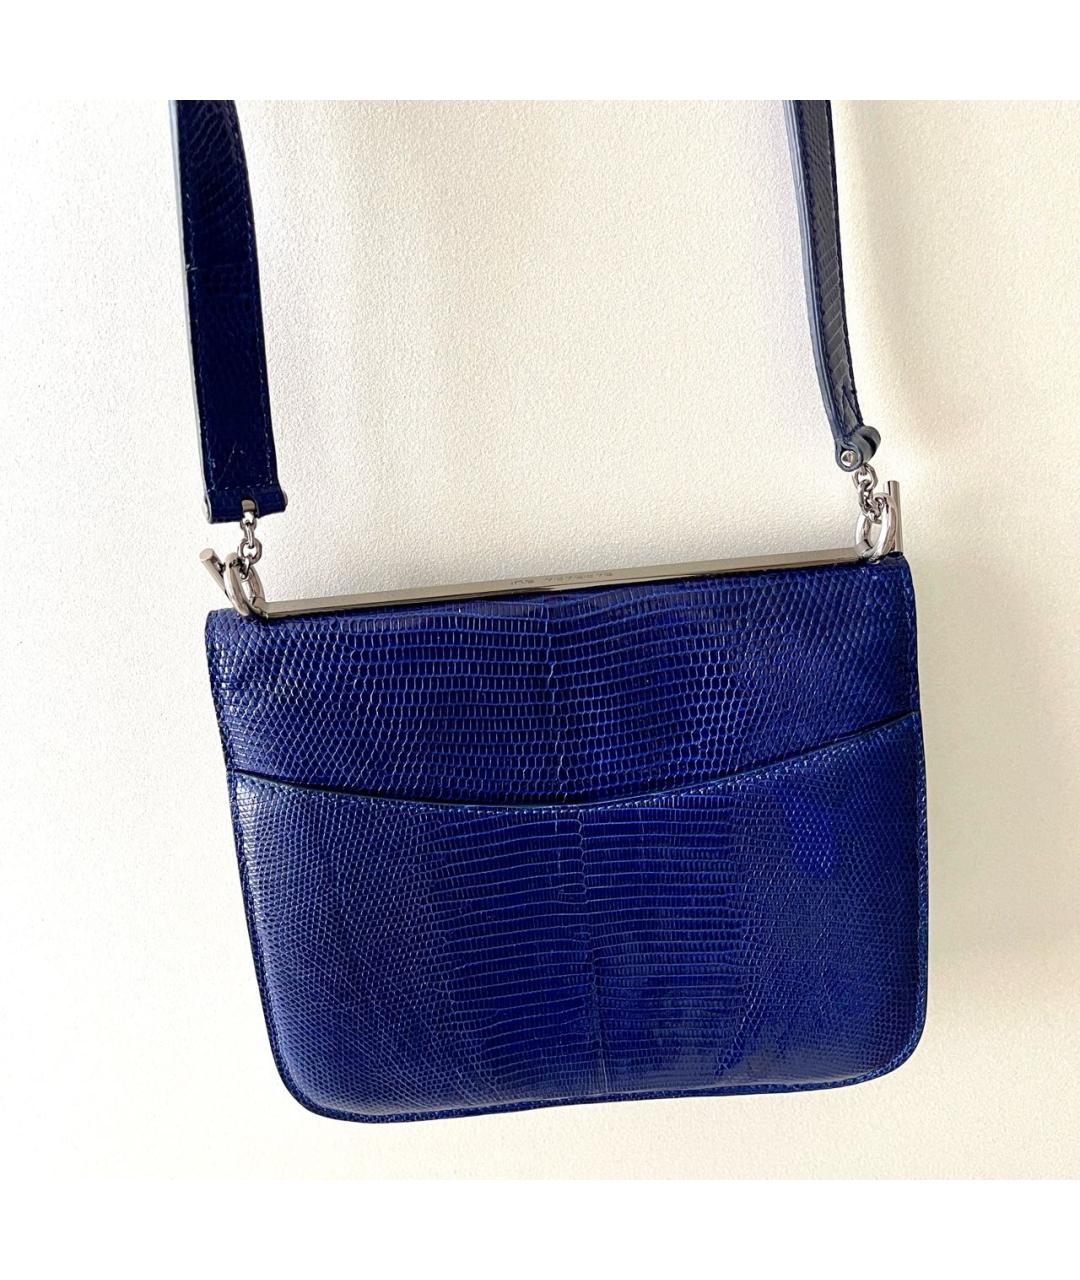 BARBARA BUI Синяя сумка через плечо из экзотической кожи, фото 2